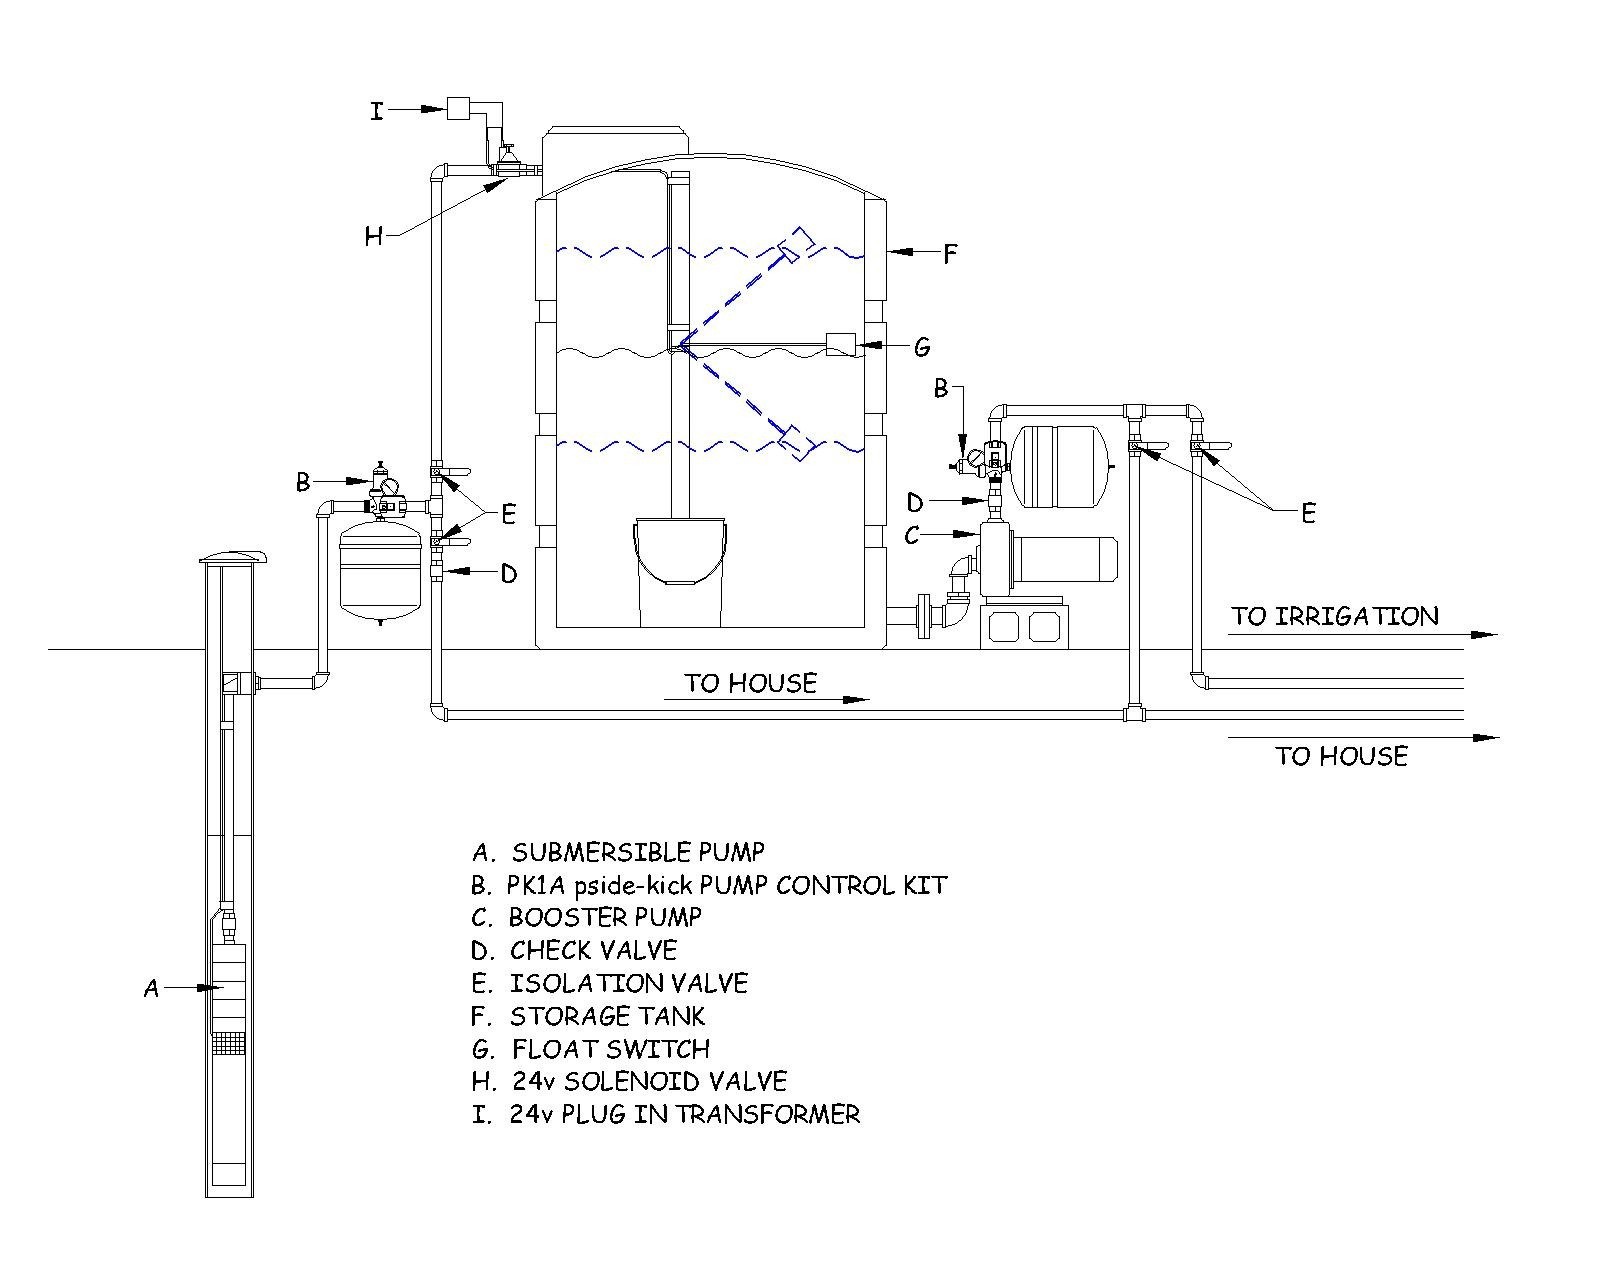 Square D Pressure Switch Wiring Diagram Square D Air Pressor Pressure Switch Wiring Diagram New Well Pump Of Square D Pressure Switch Wiring Diagram